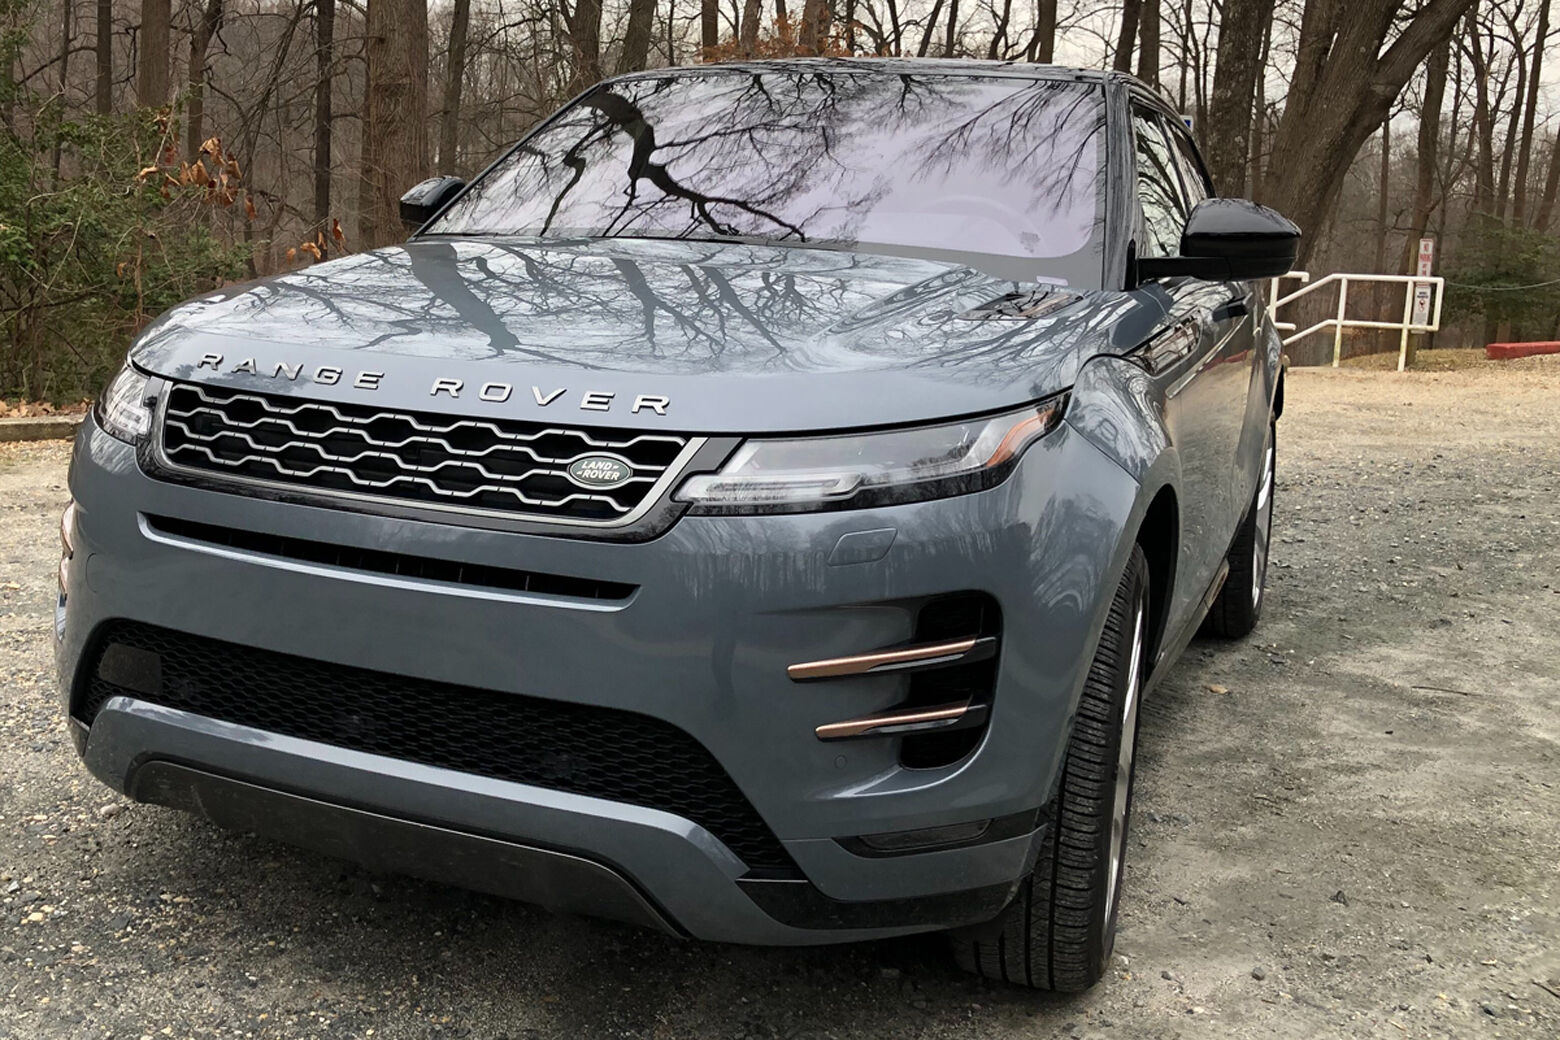 Exterior of 2020 Range Rover Evoque